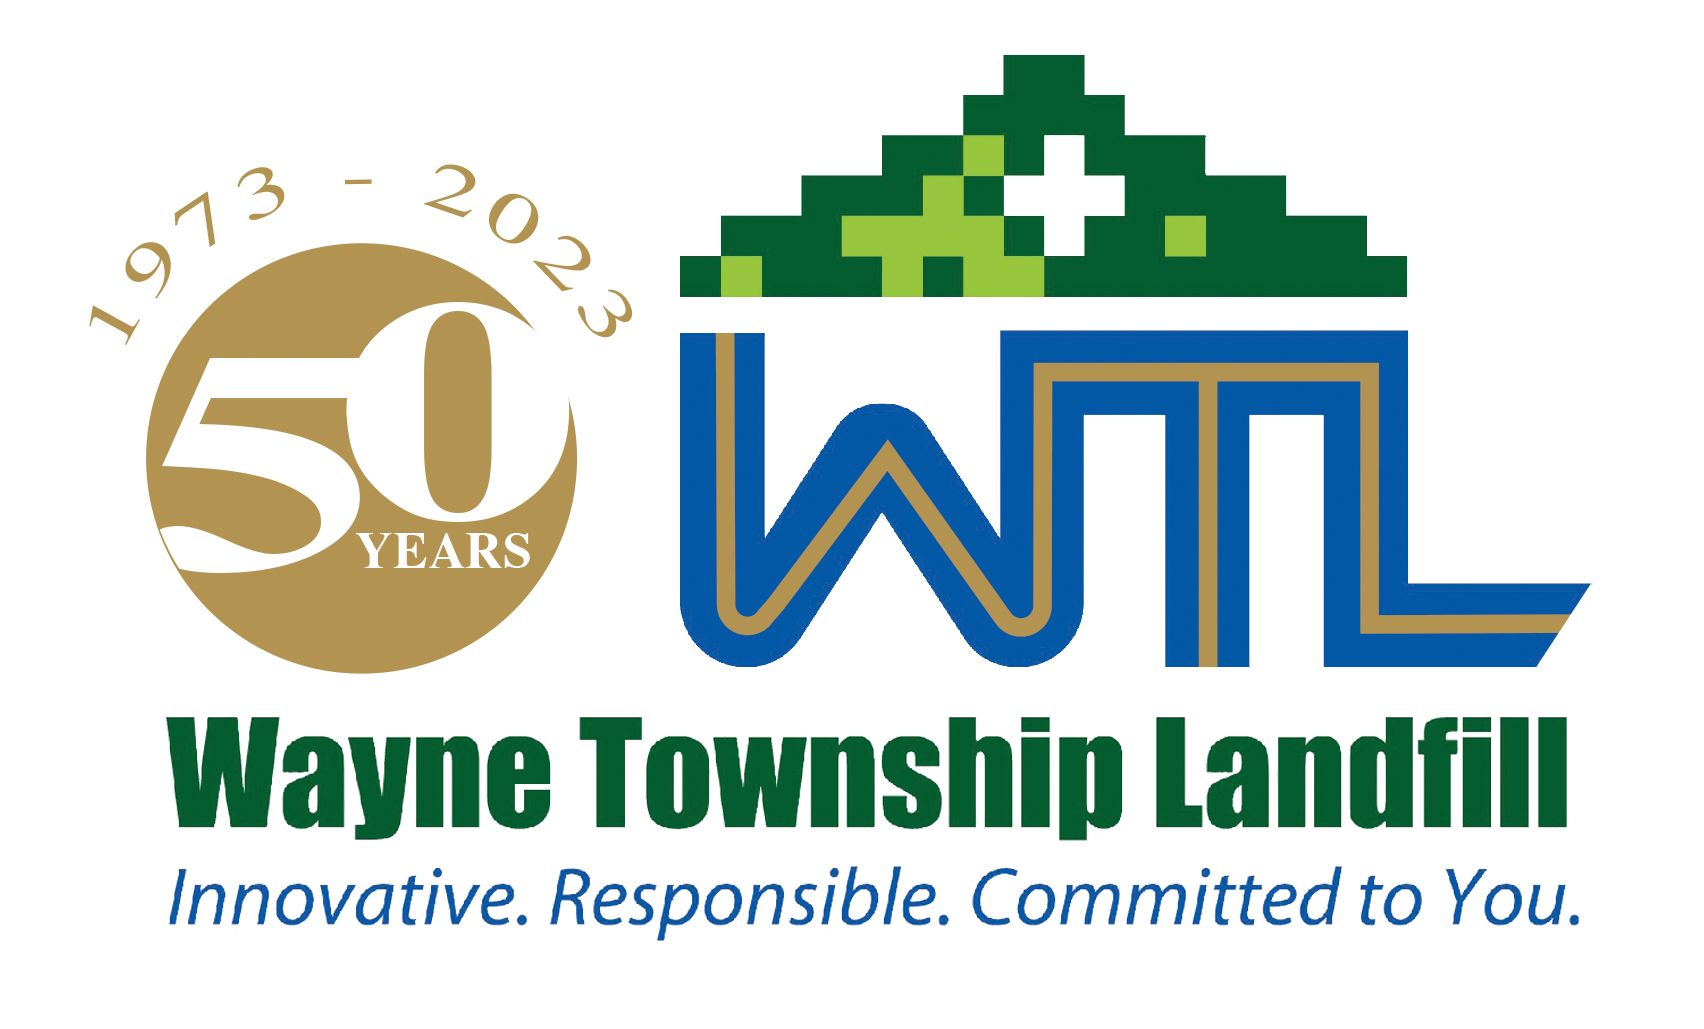 Wayne Township Landfill logo